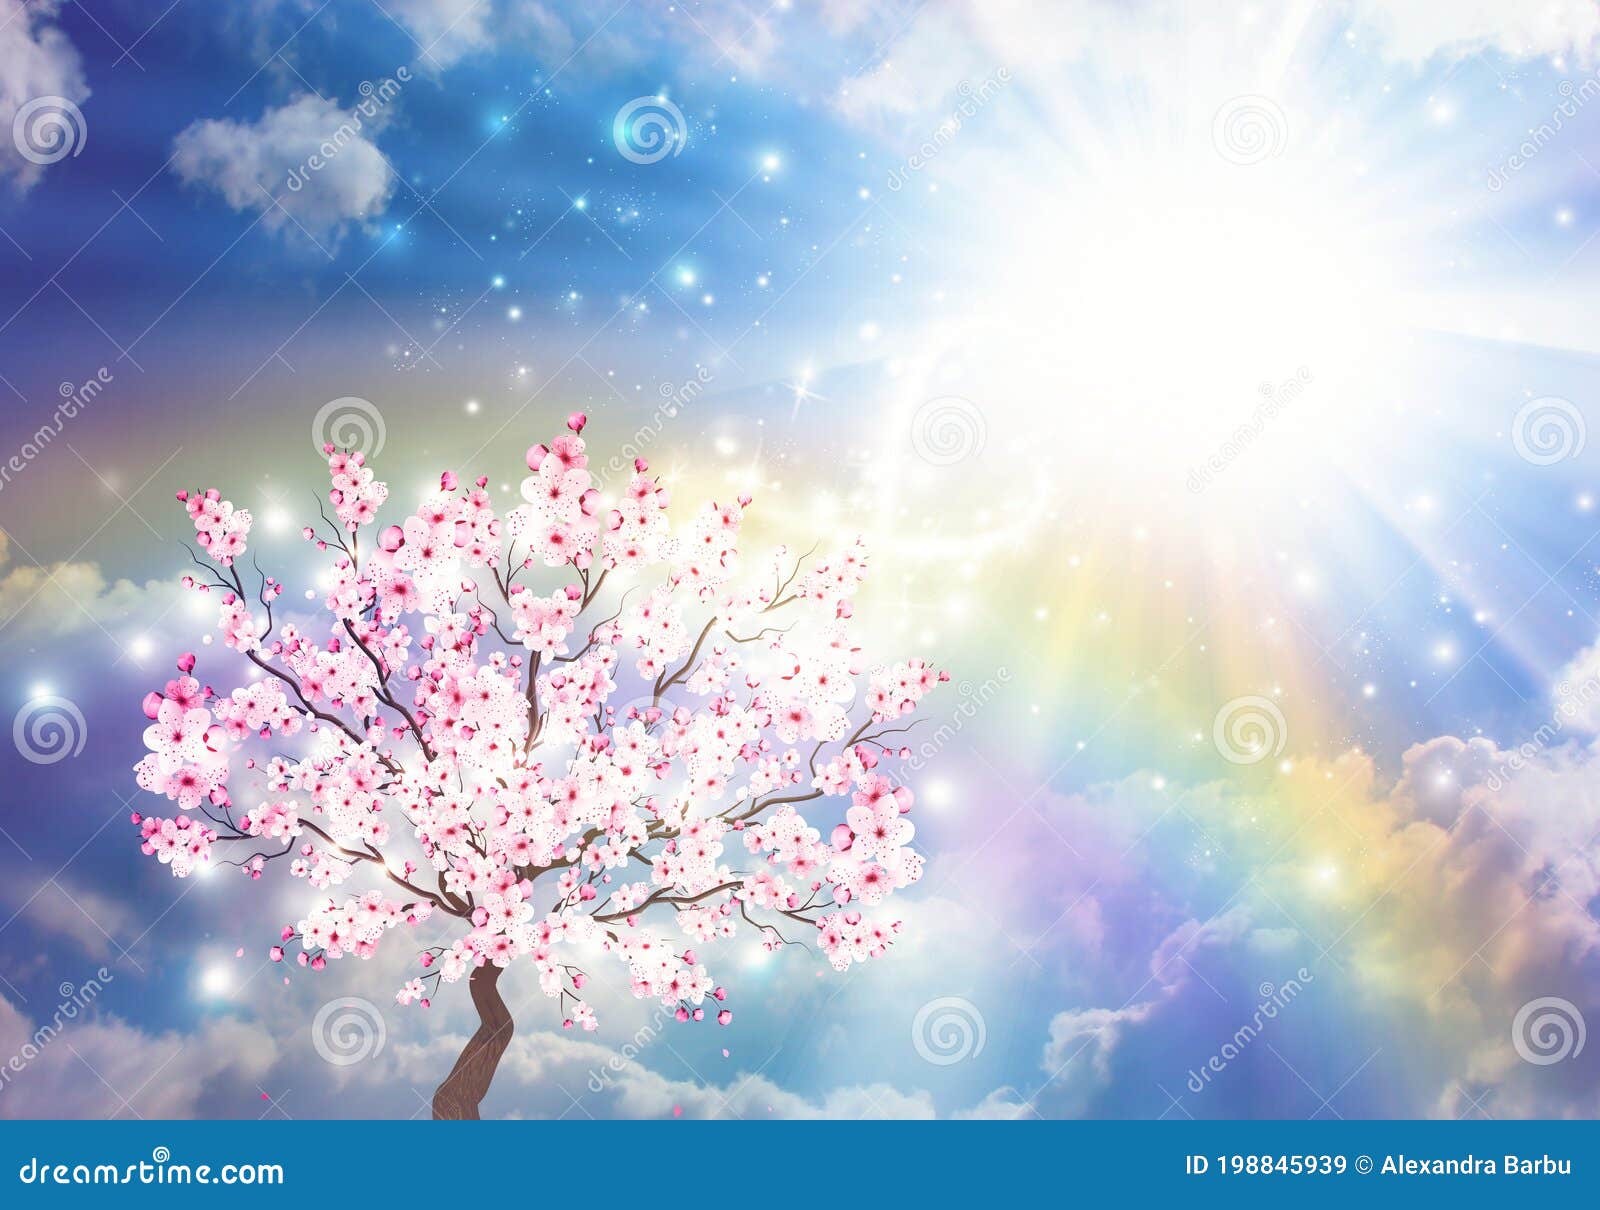 wish tree, spiritual healing, rainbow on sky over clouds, bright sun aura